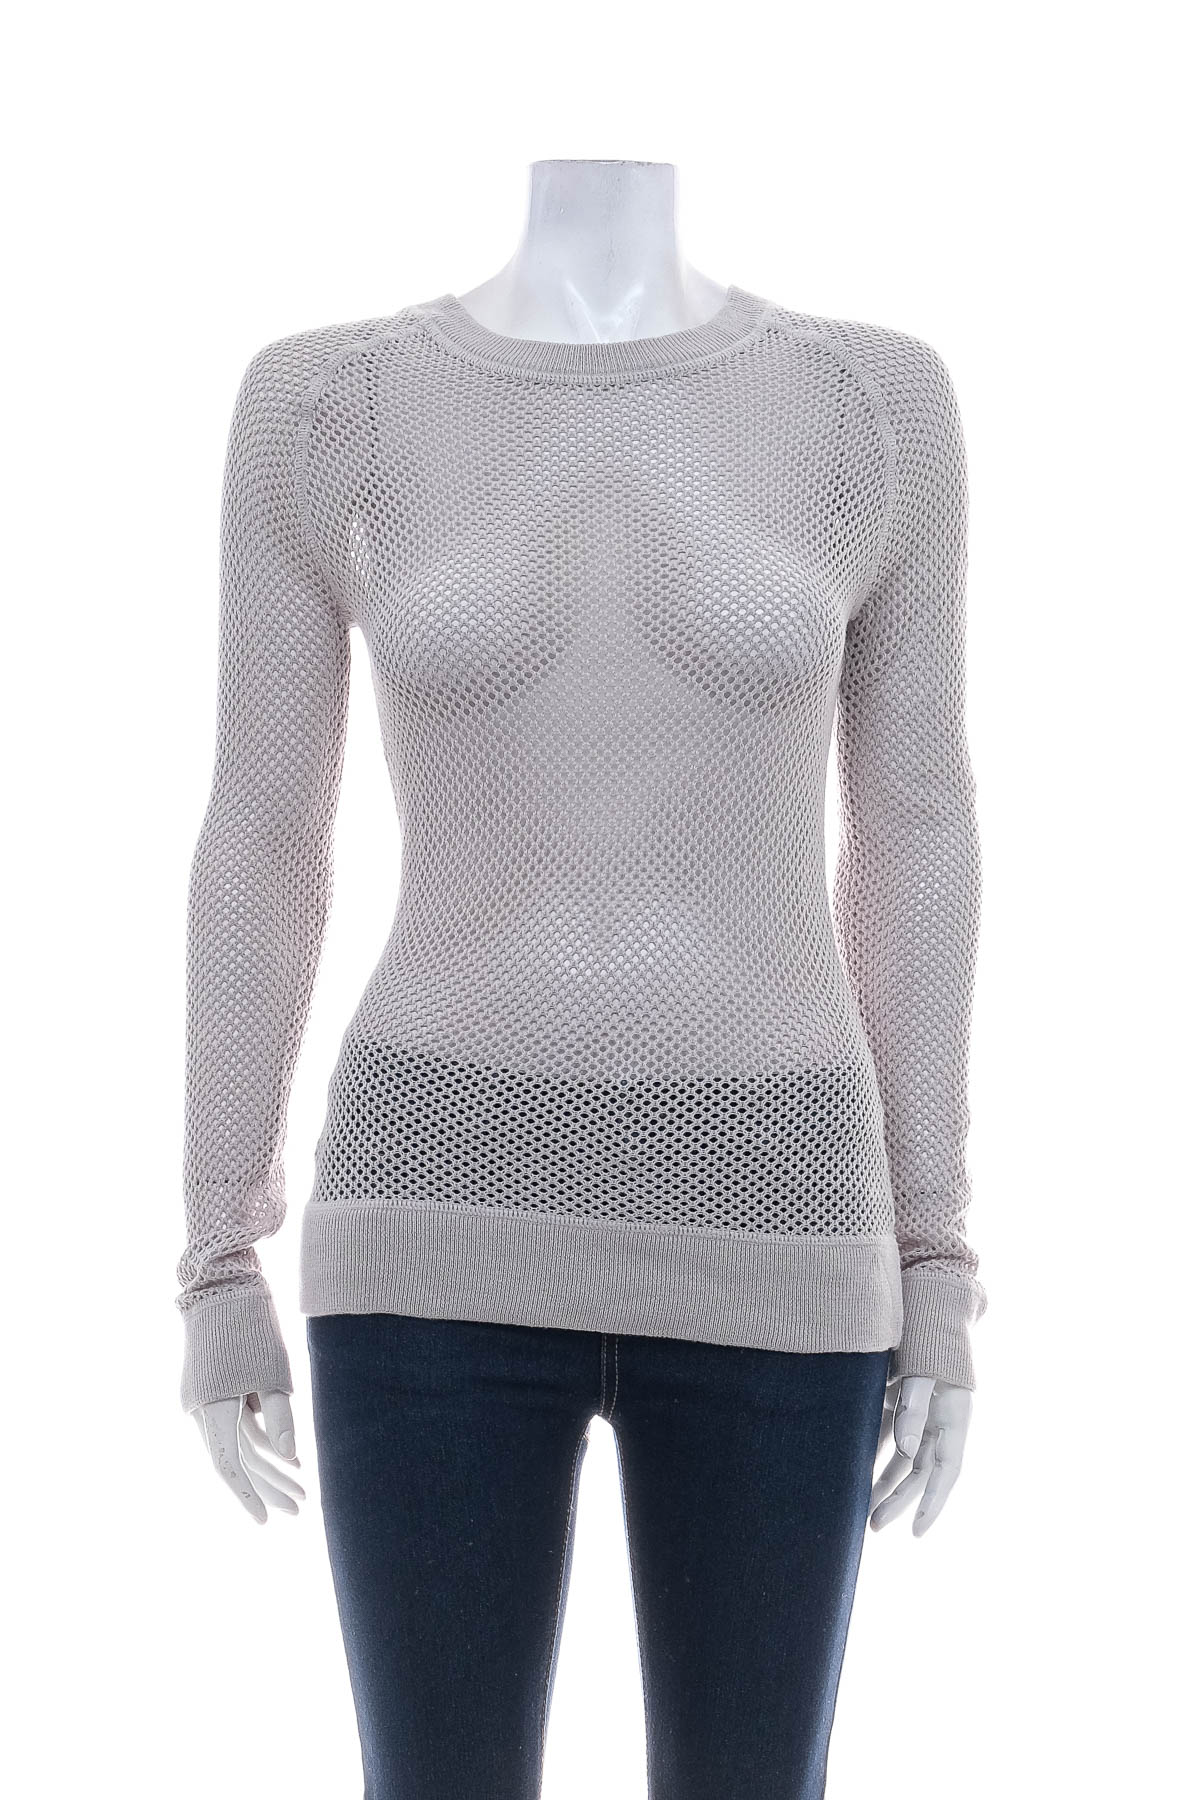 Women's sweater - Urbane - 0